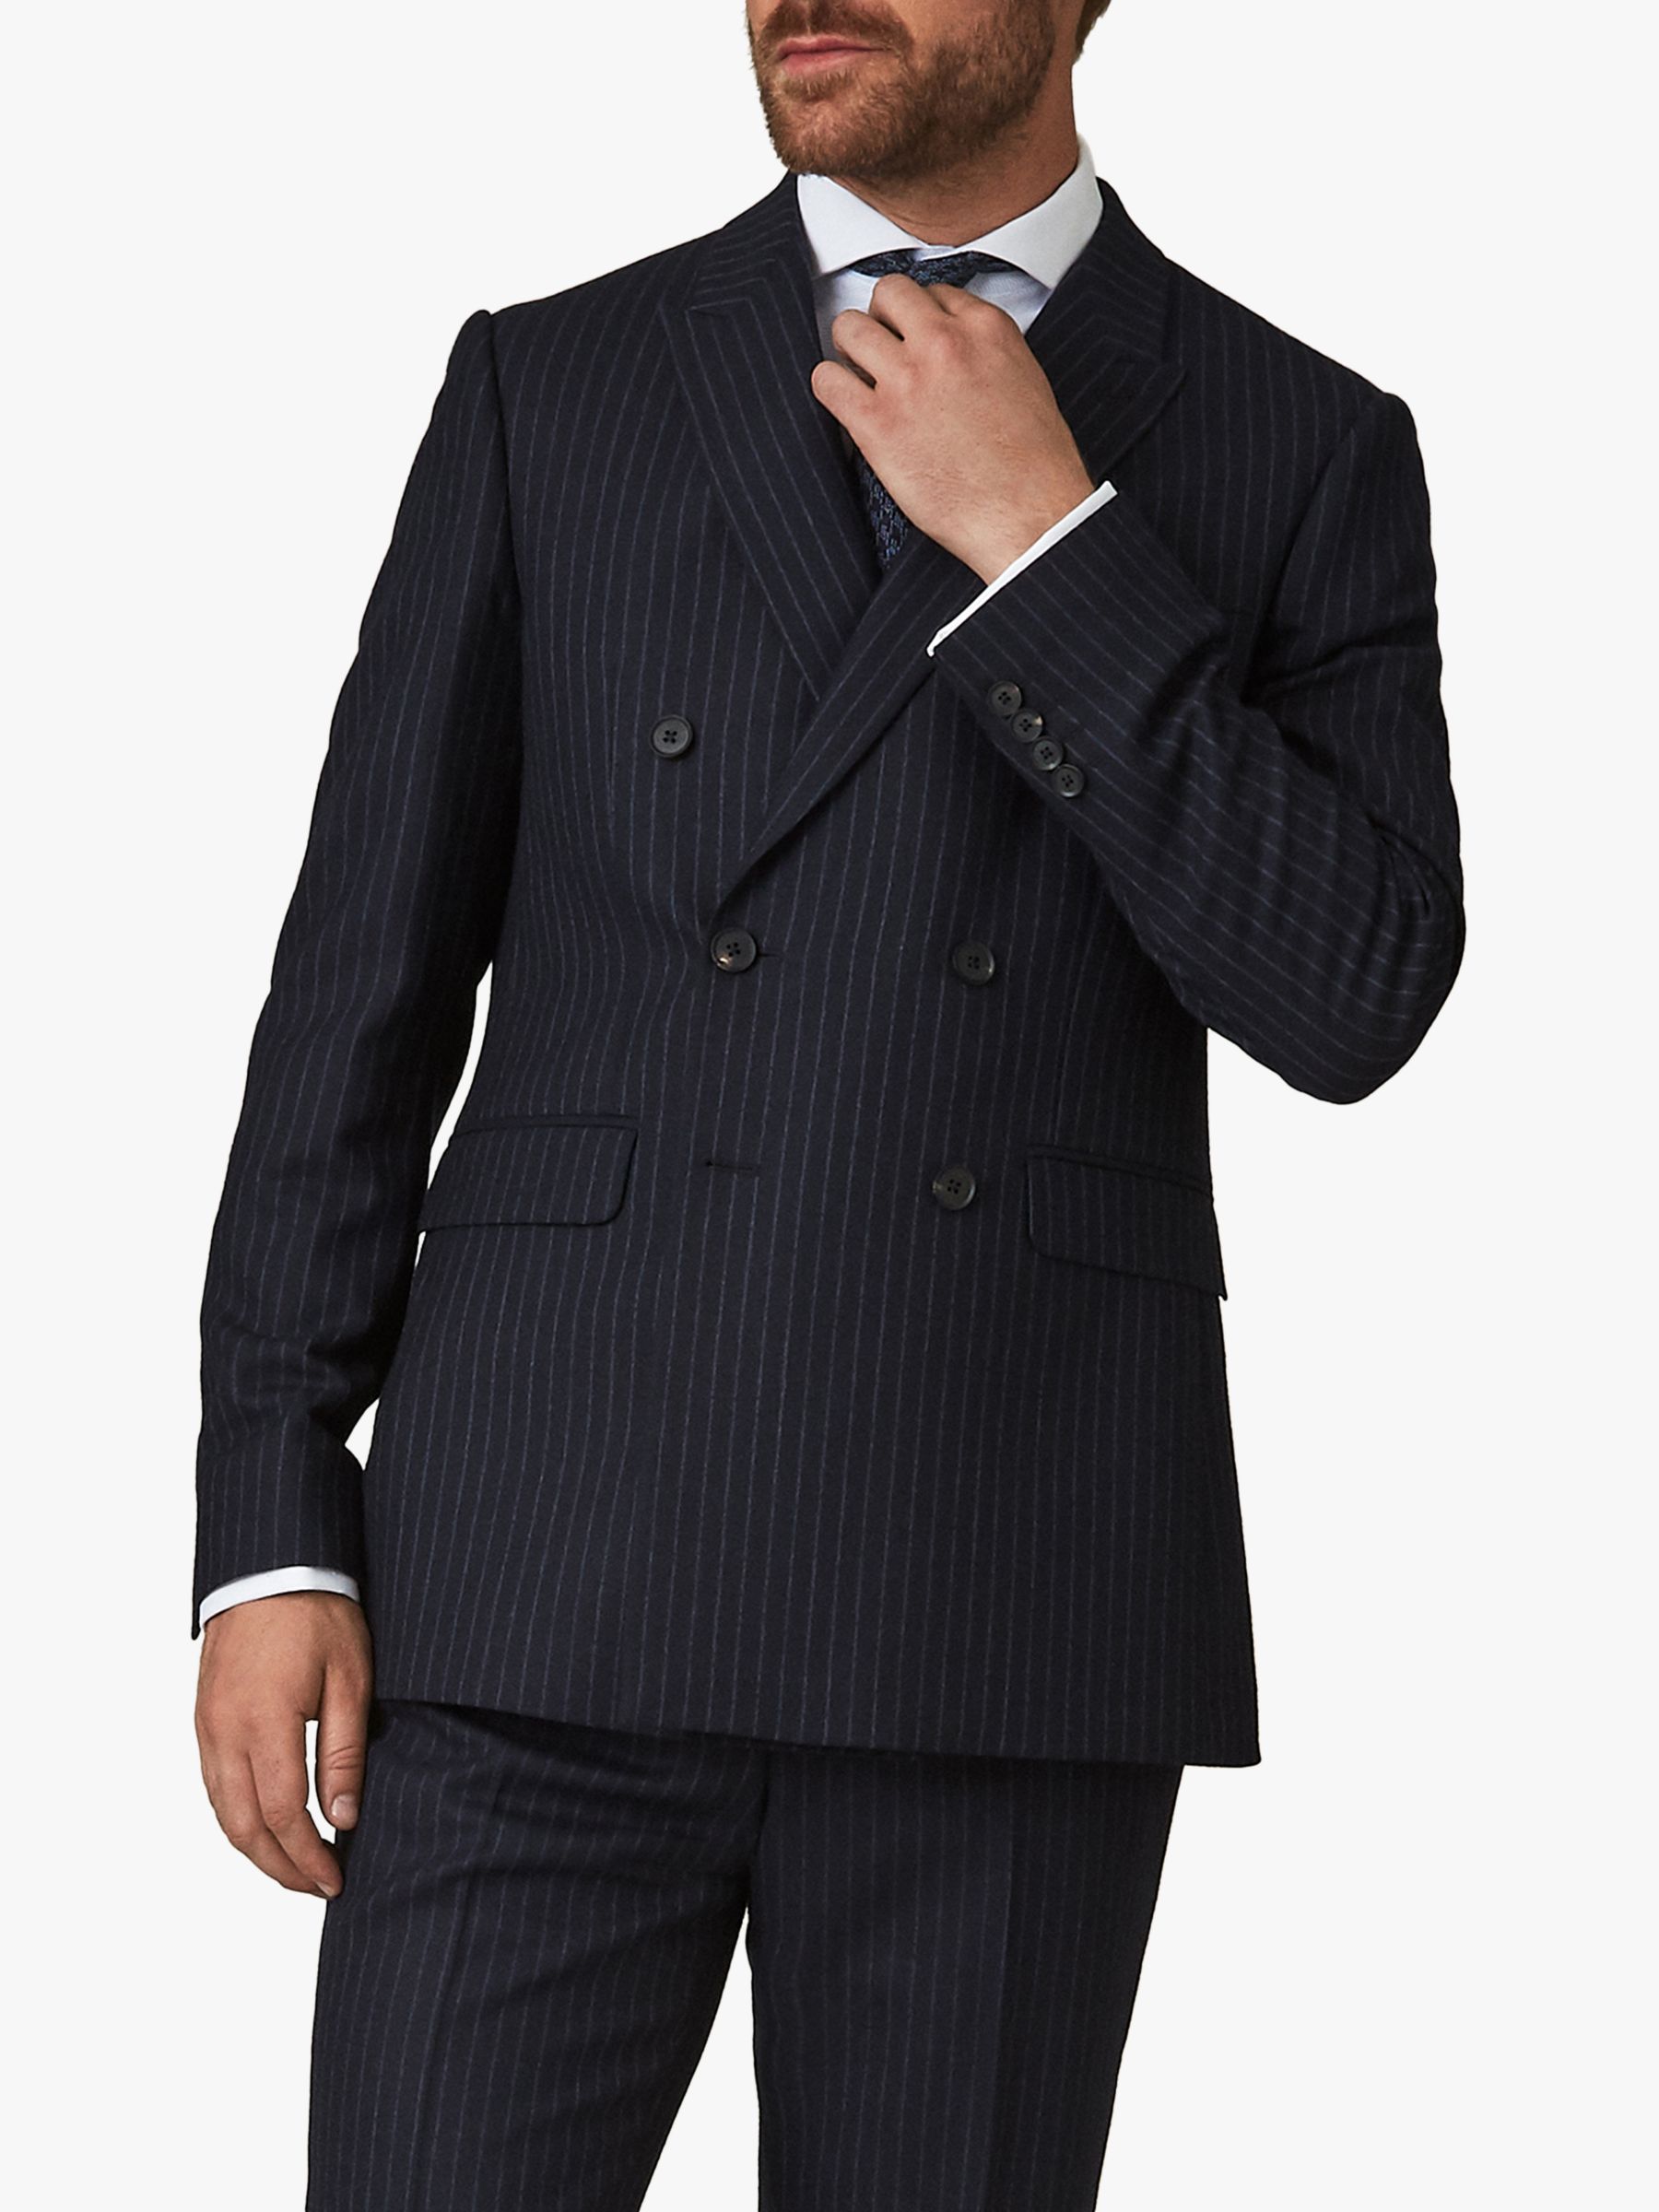 Jaeger Wool Pinstripe Regular Fit Double Breasted Suit Jacket, Navy